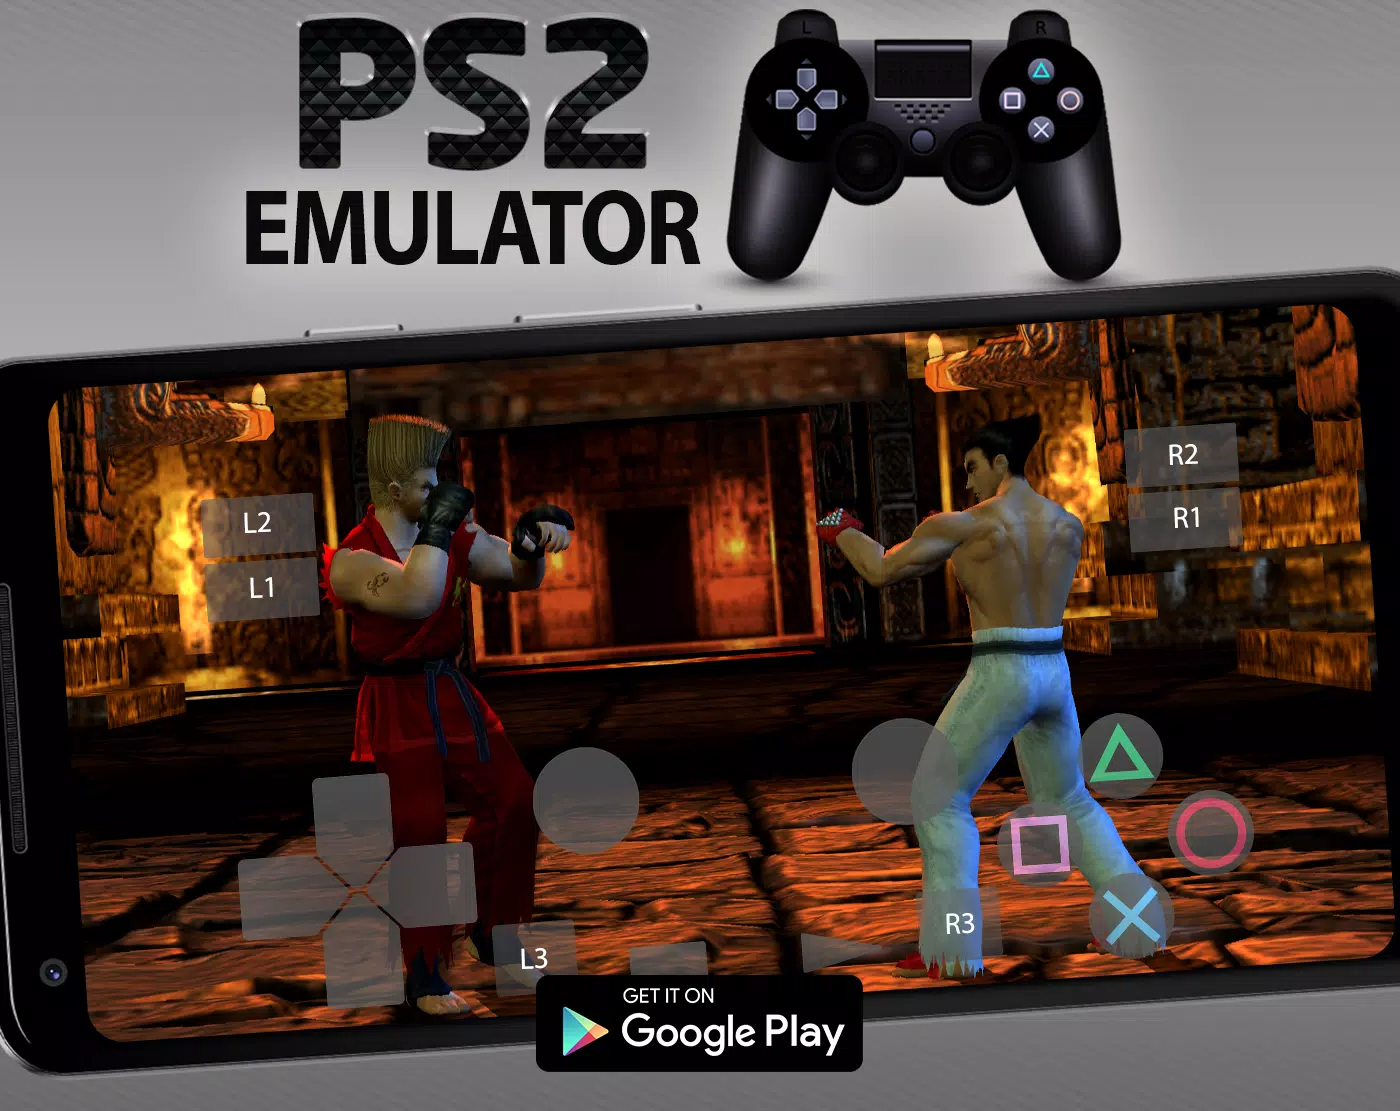 New PS2 Emulator - PRO PlayStation 2 Emulator APK for Android Download